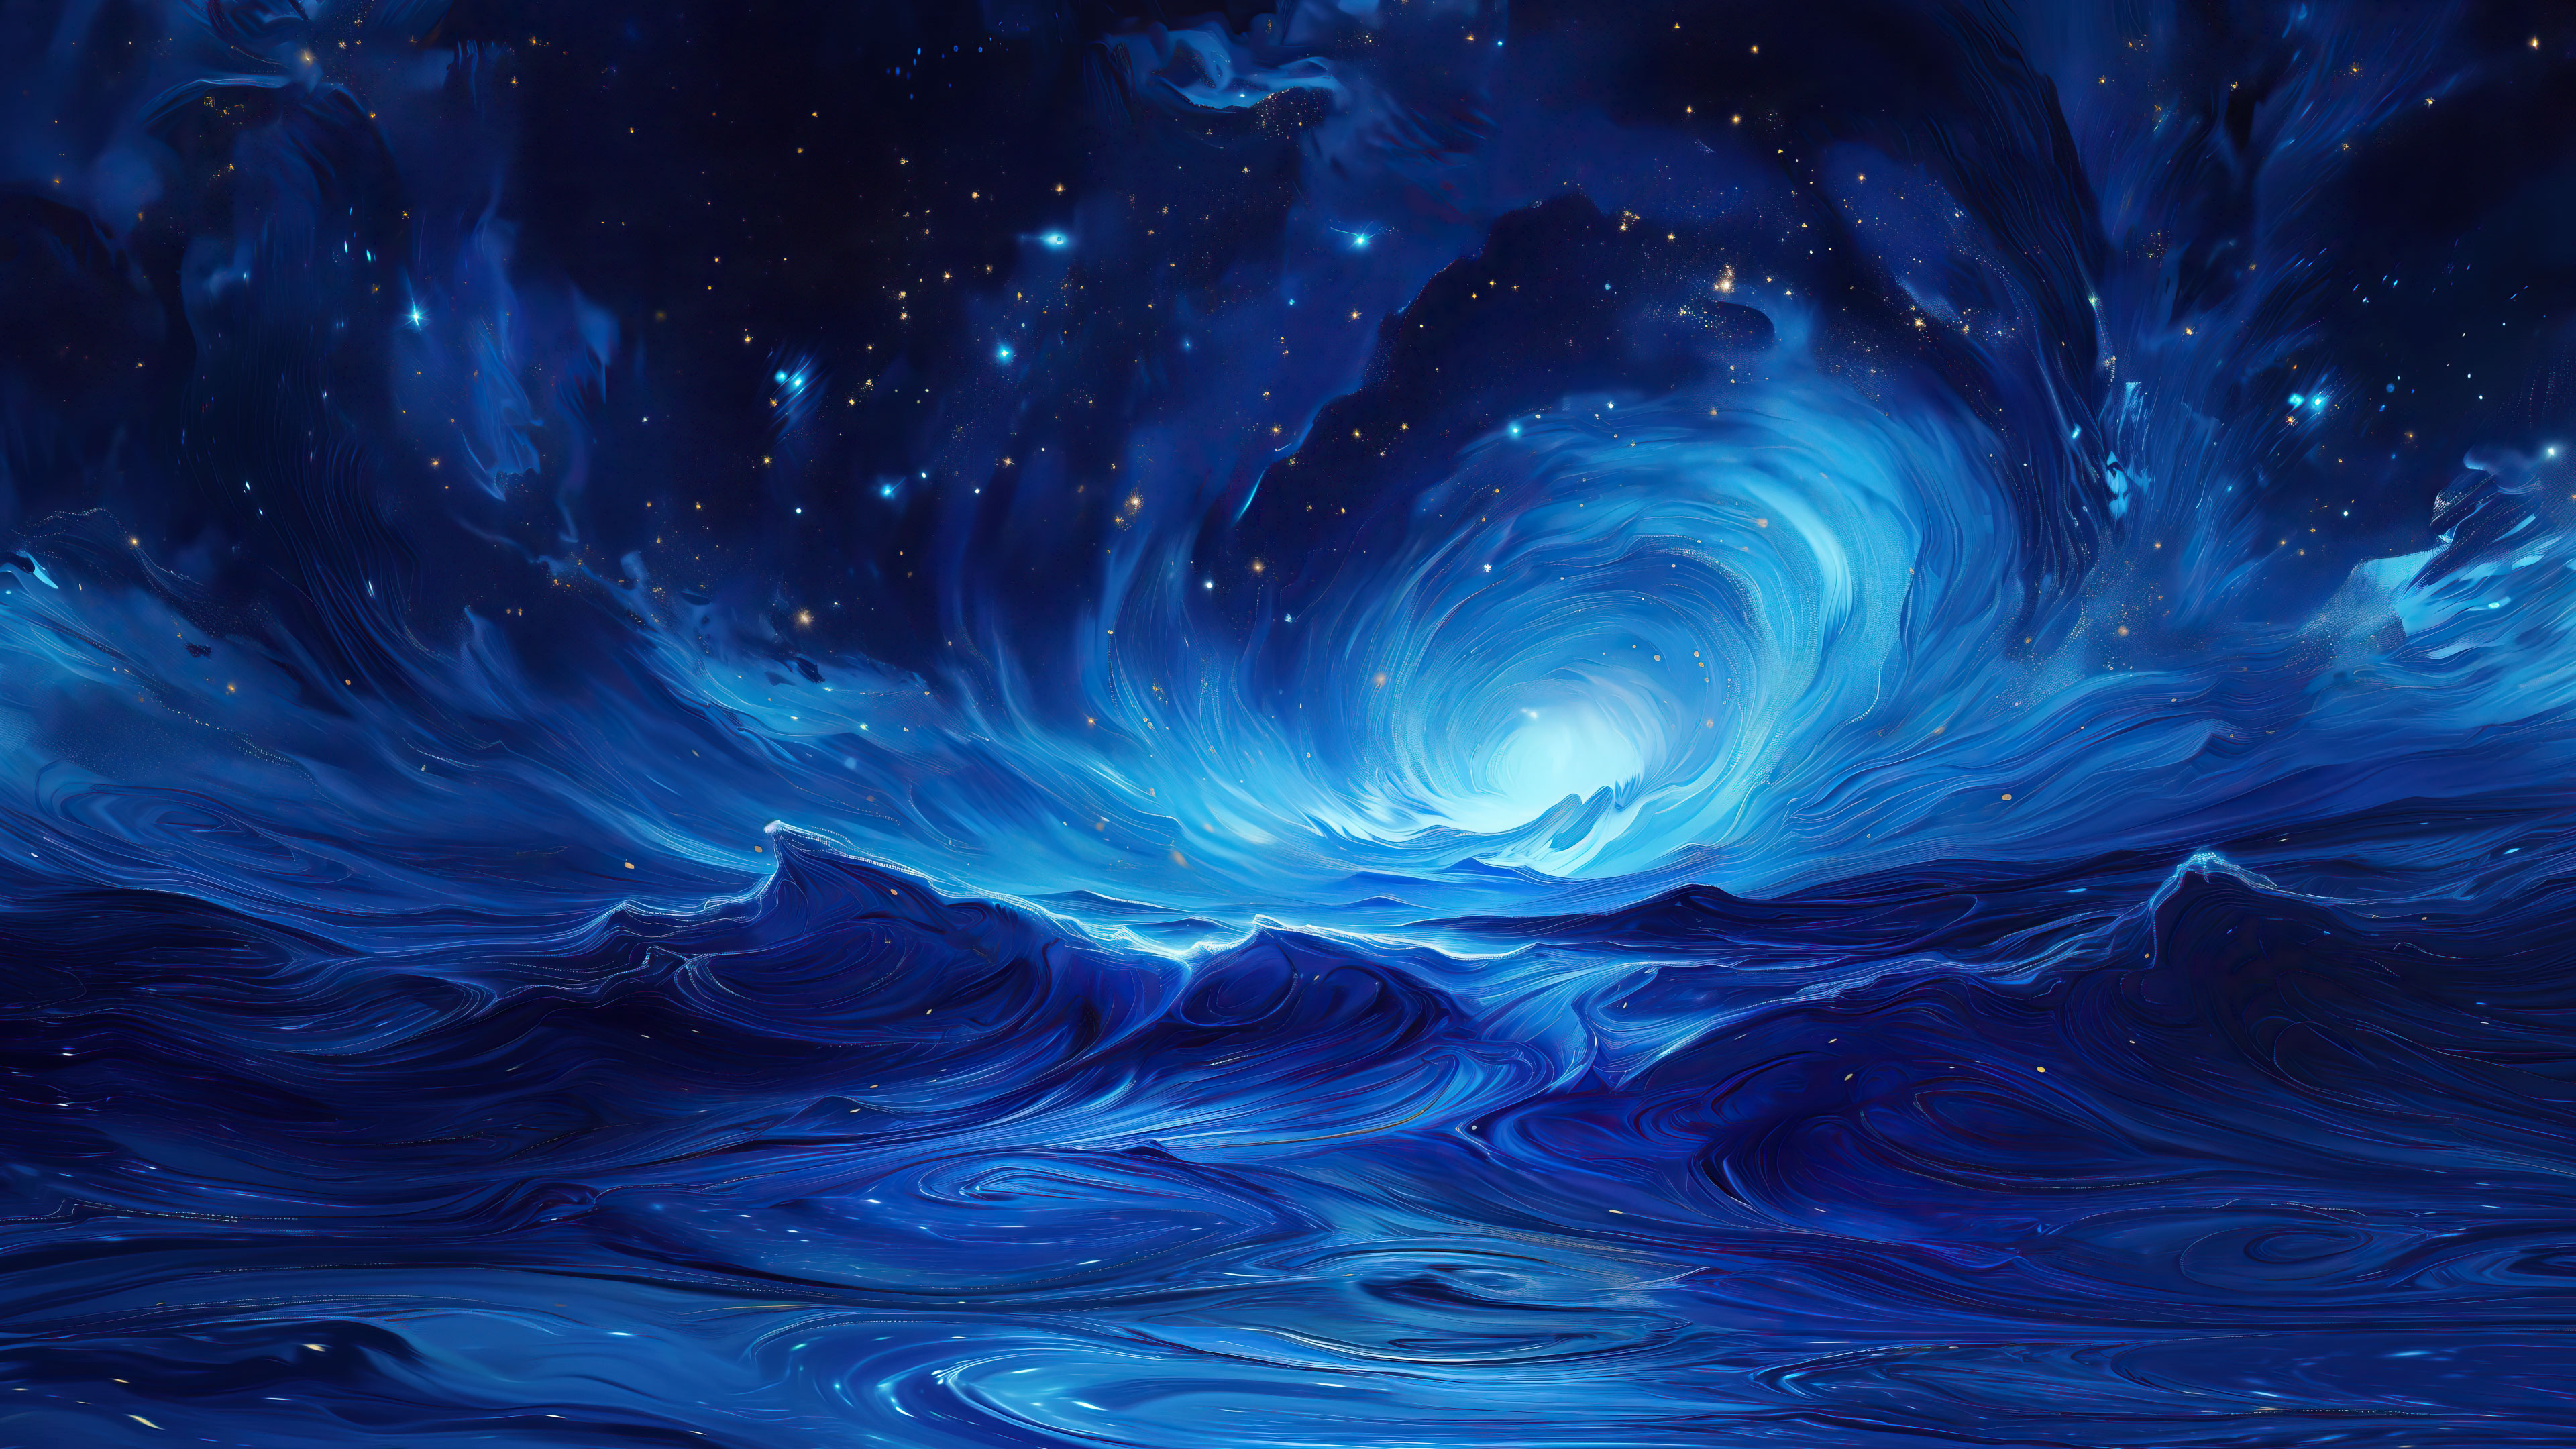 4k-Blue-Galaxy-Waves-4K-Wallpaper.jpg